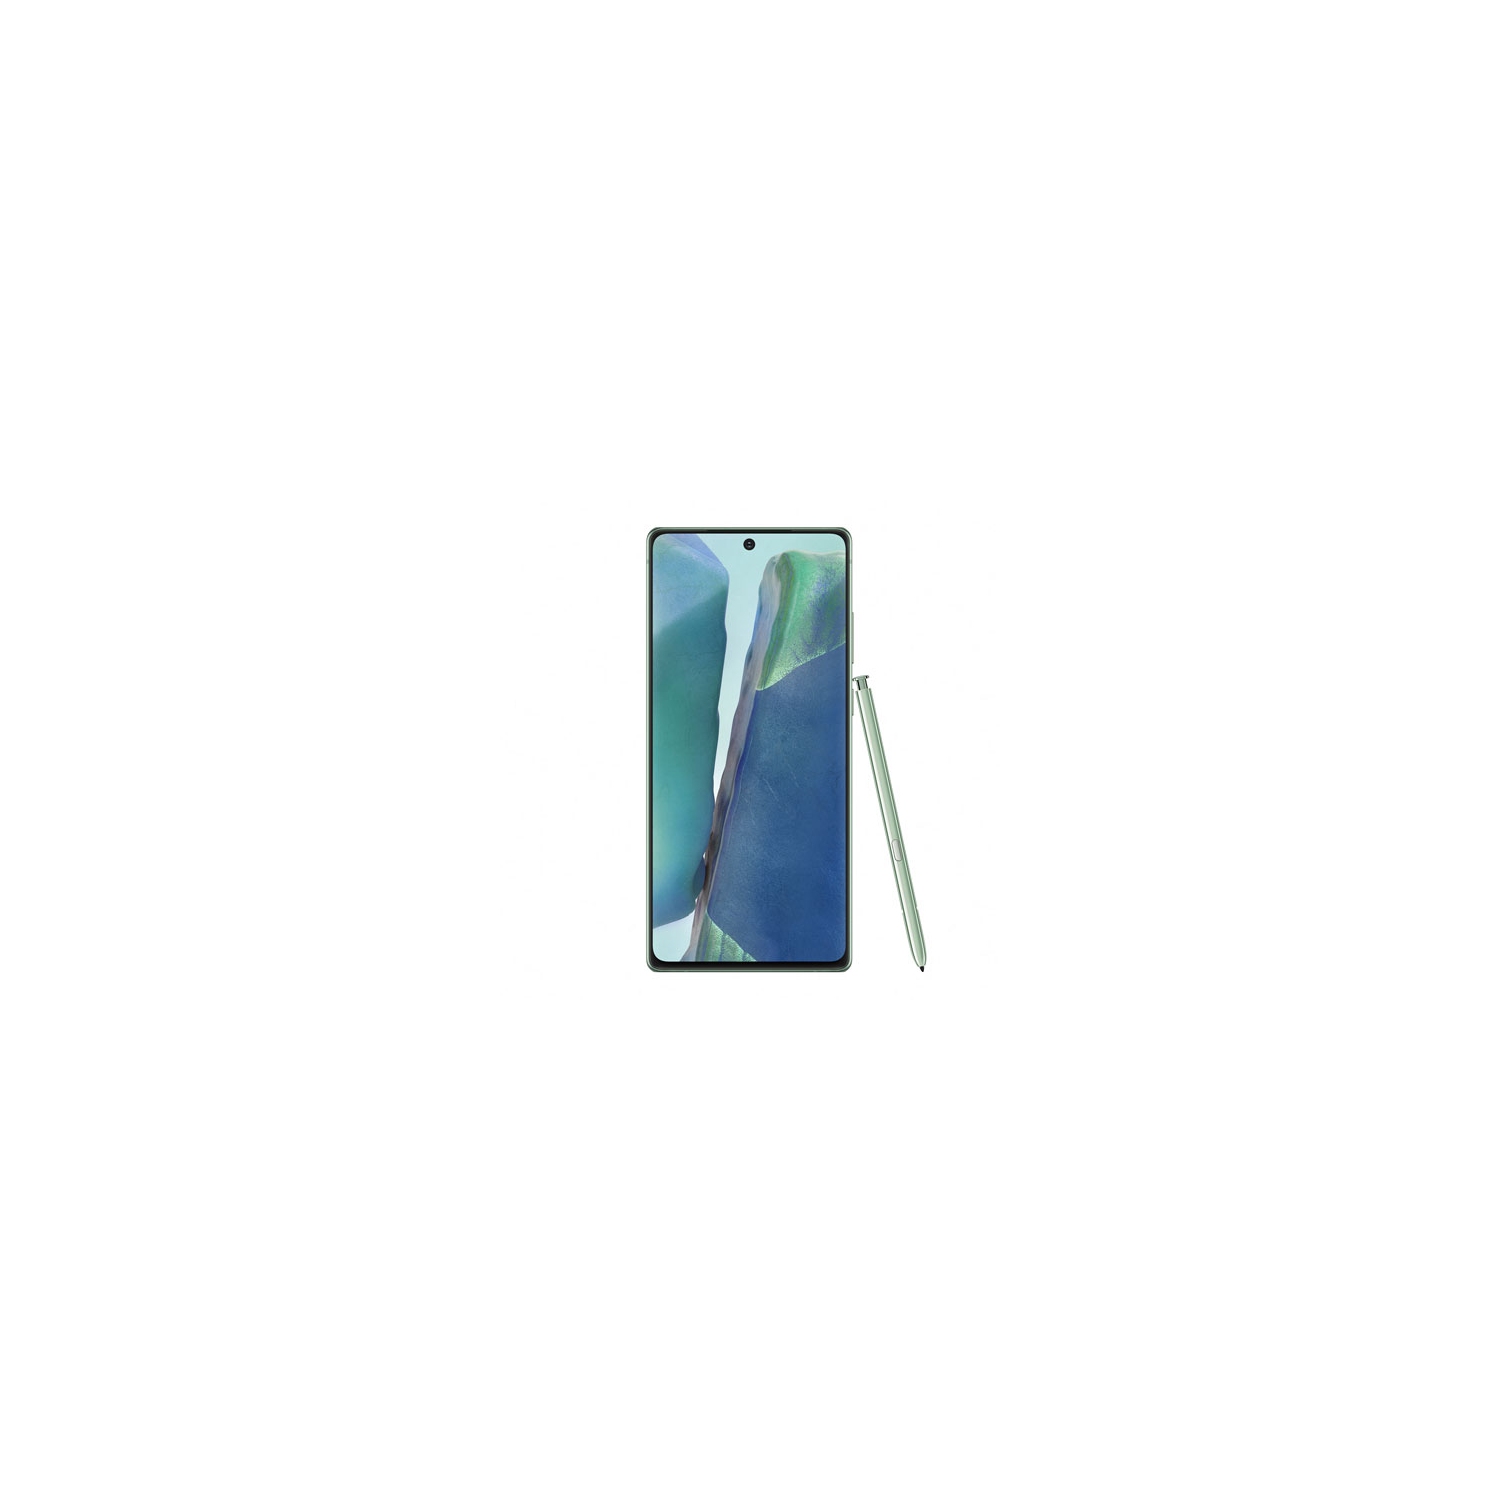 Samsung Galaxy Note 20 128GB Smartphone - Mystic Green - Unlocked - Open Box